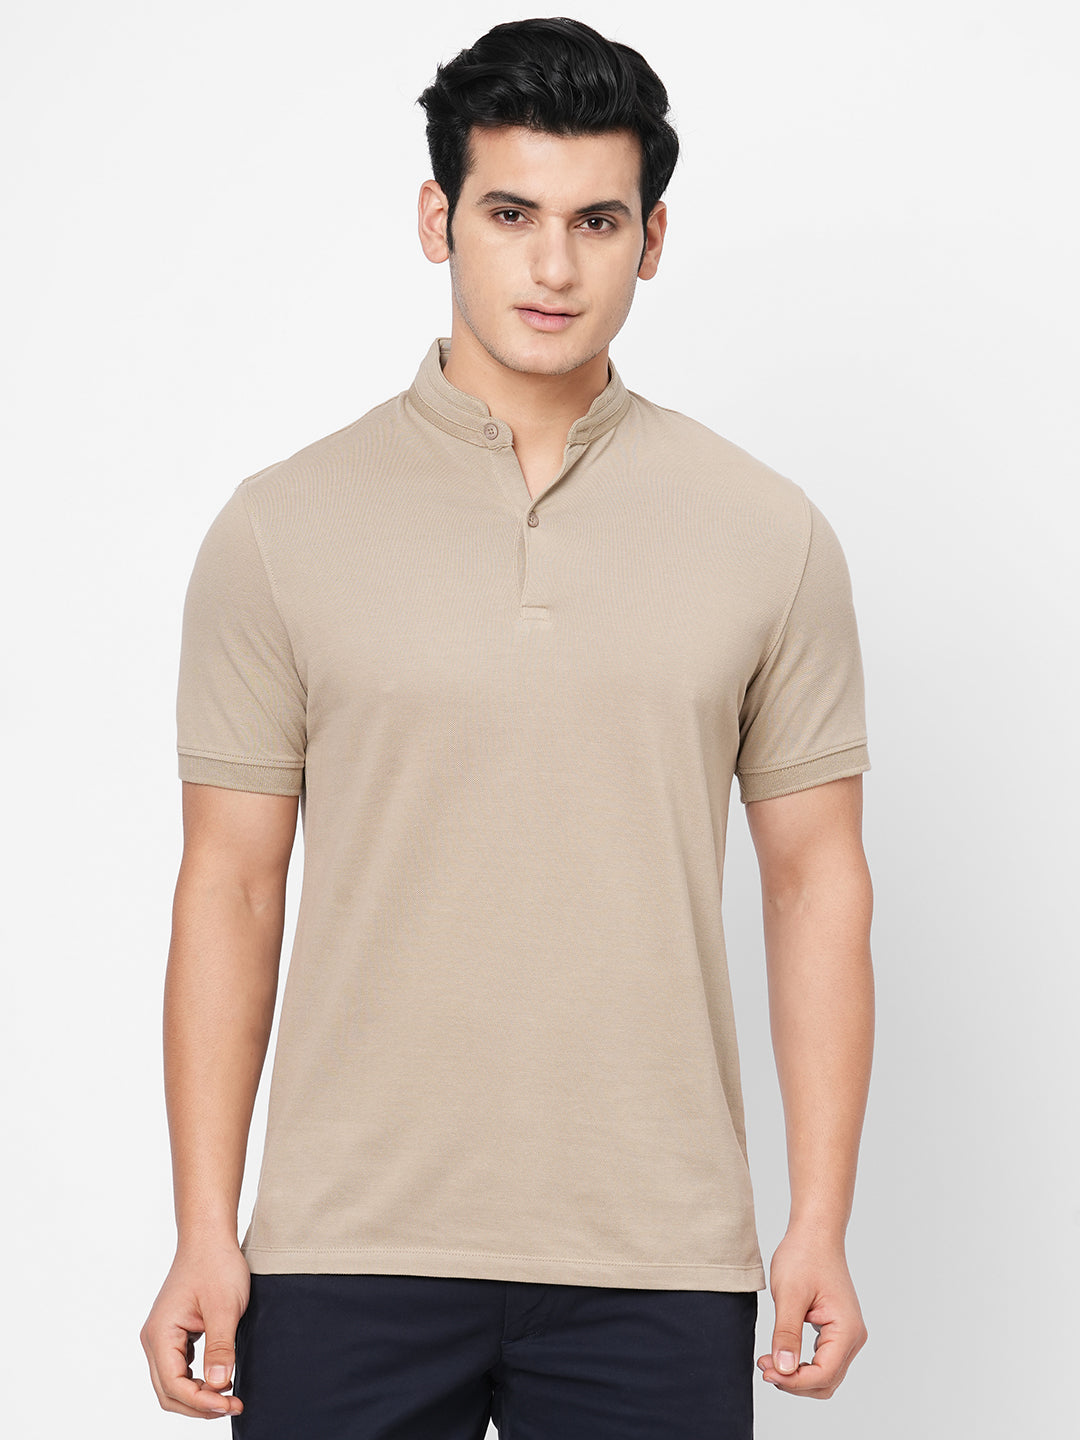 Men's Cotton Khaki Regular Fit Tshirt